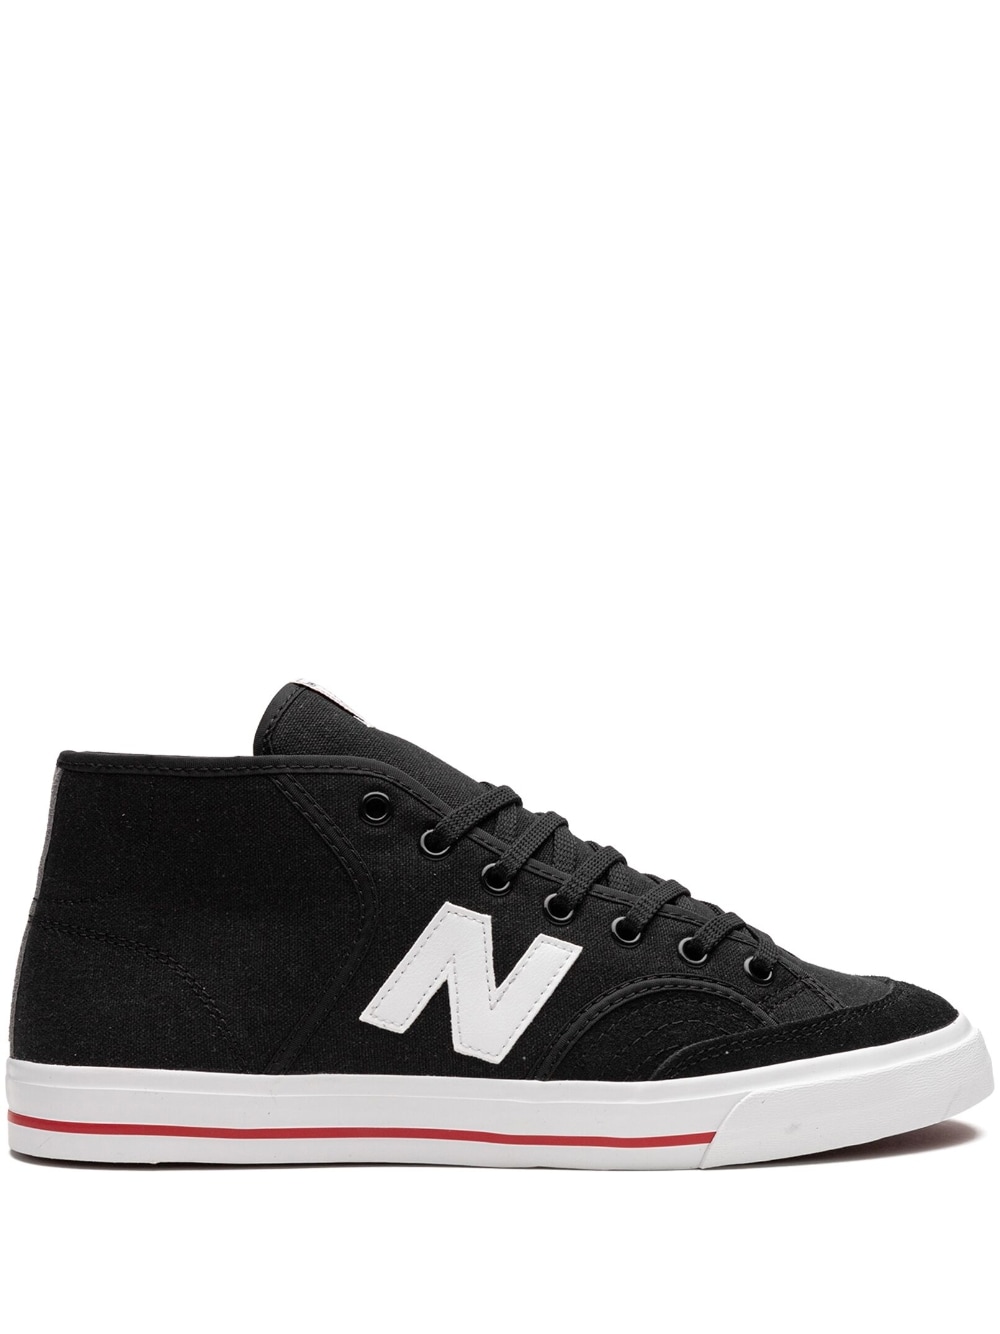 New Balance Pro Court 213 "Black/White" sneakers